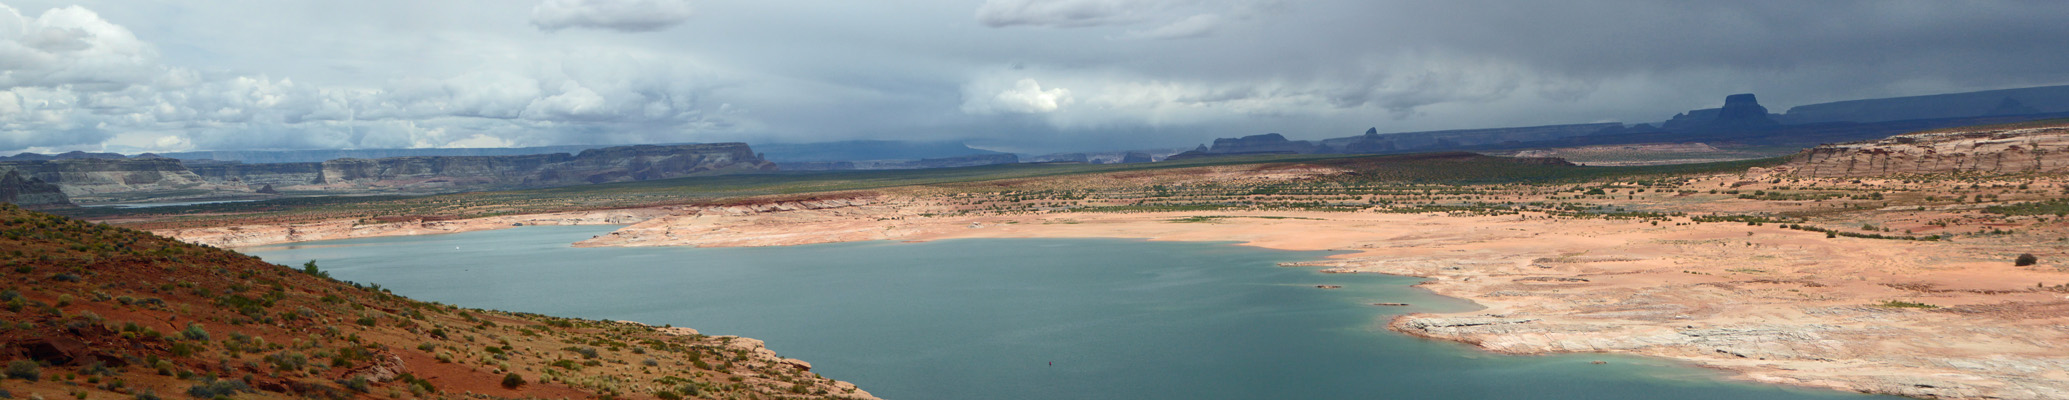 Navajo Pt panorama